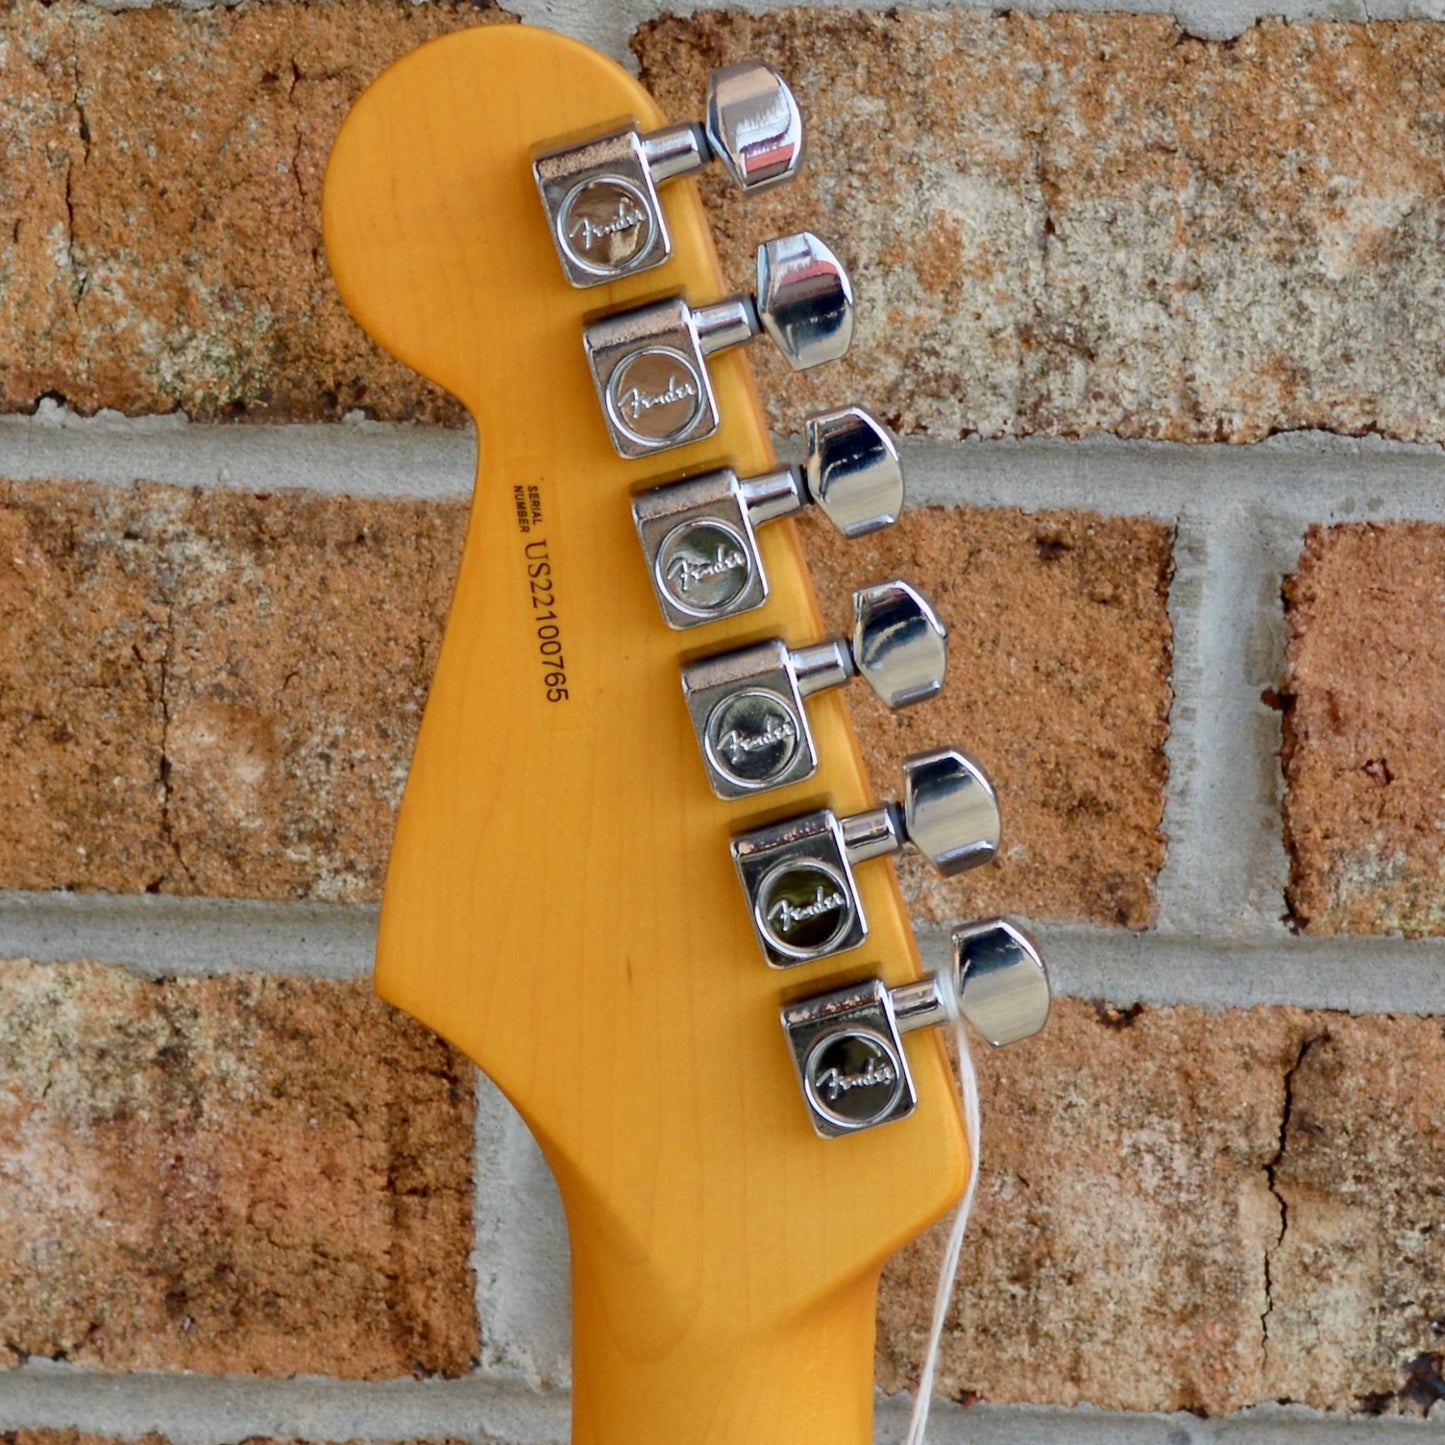 Fender American Professional II Stratocaster®, Maple Fingerboard, Mystic Surf Green